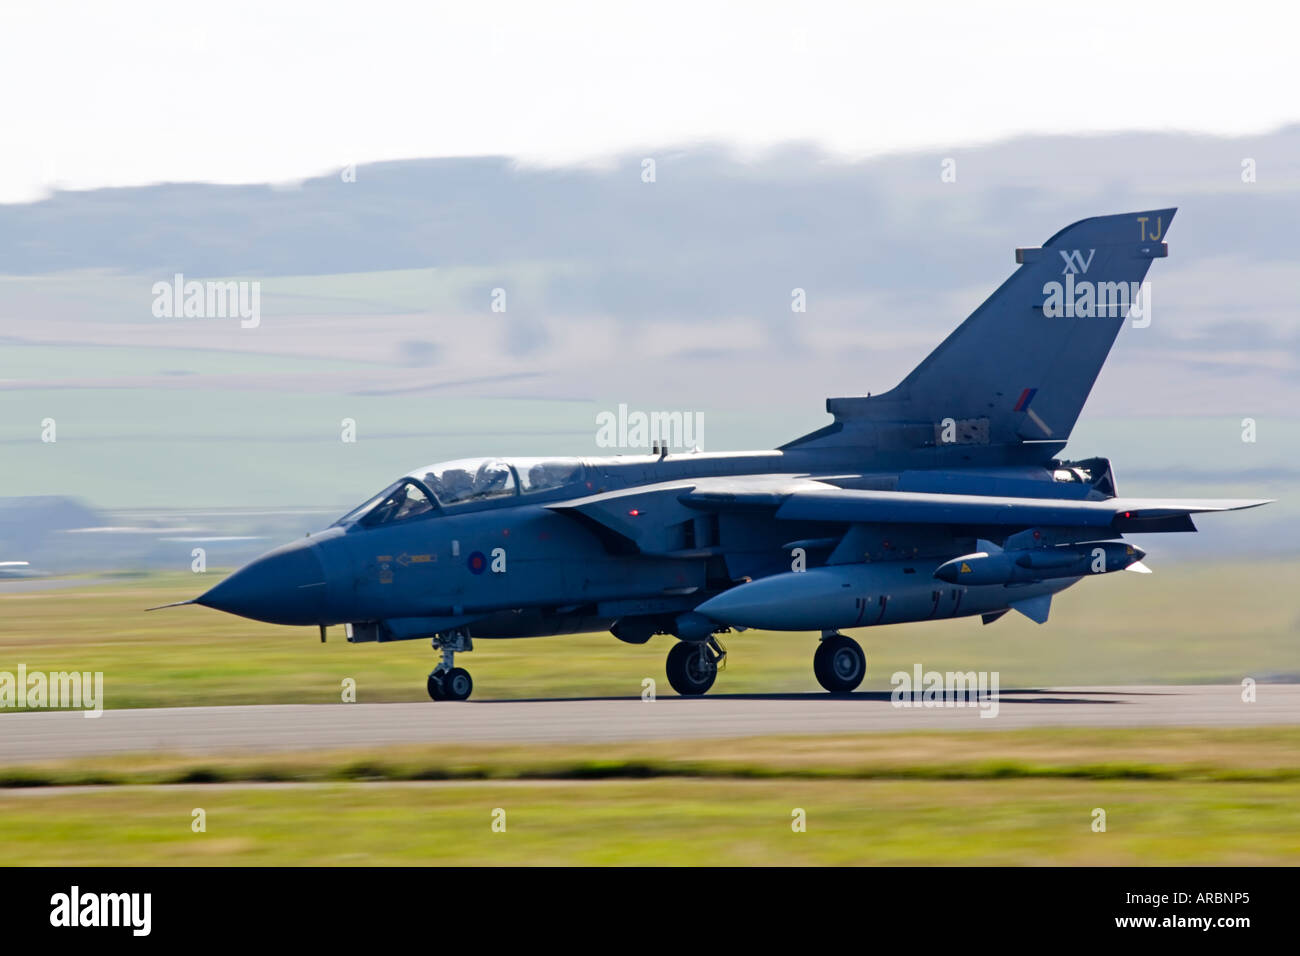 RAF Tornado GR4 617 Squadron on runway Stock Photo